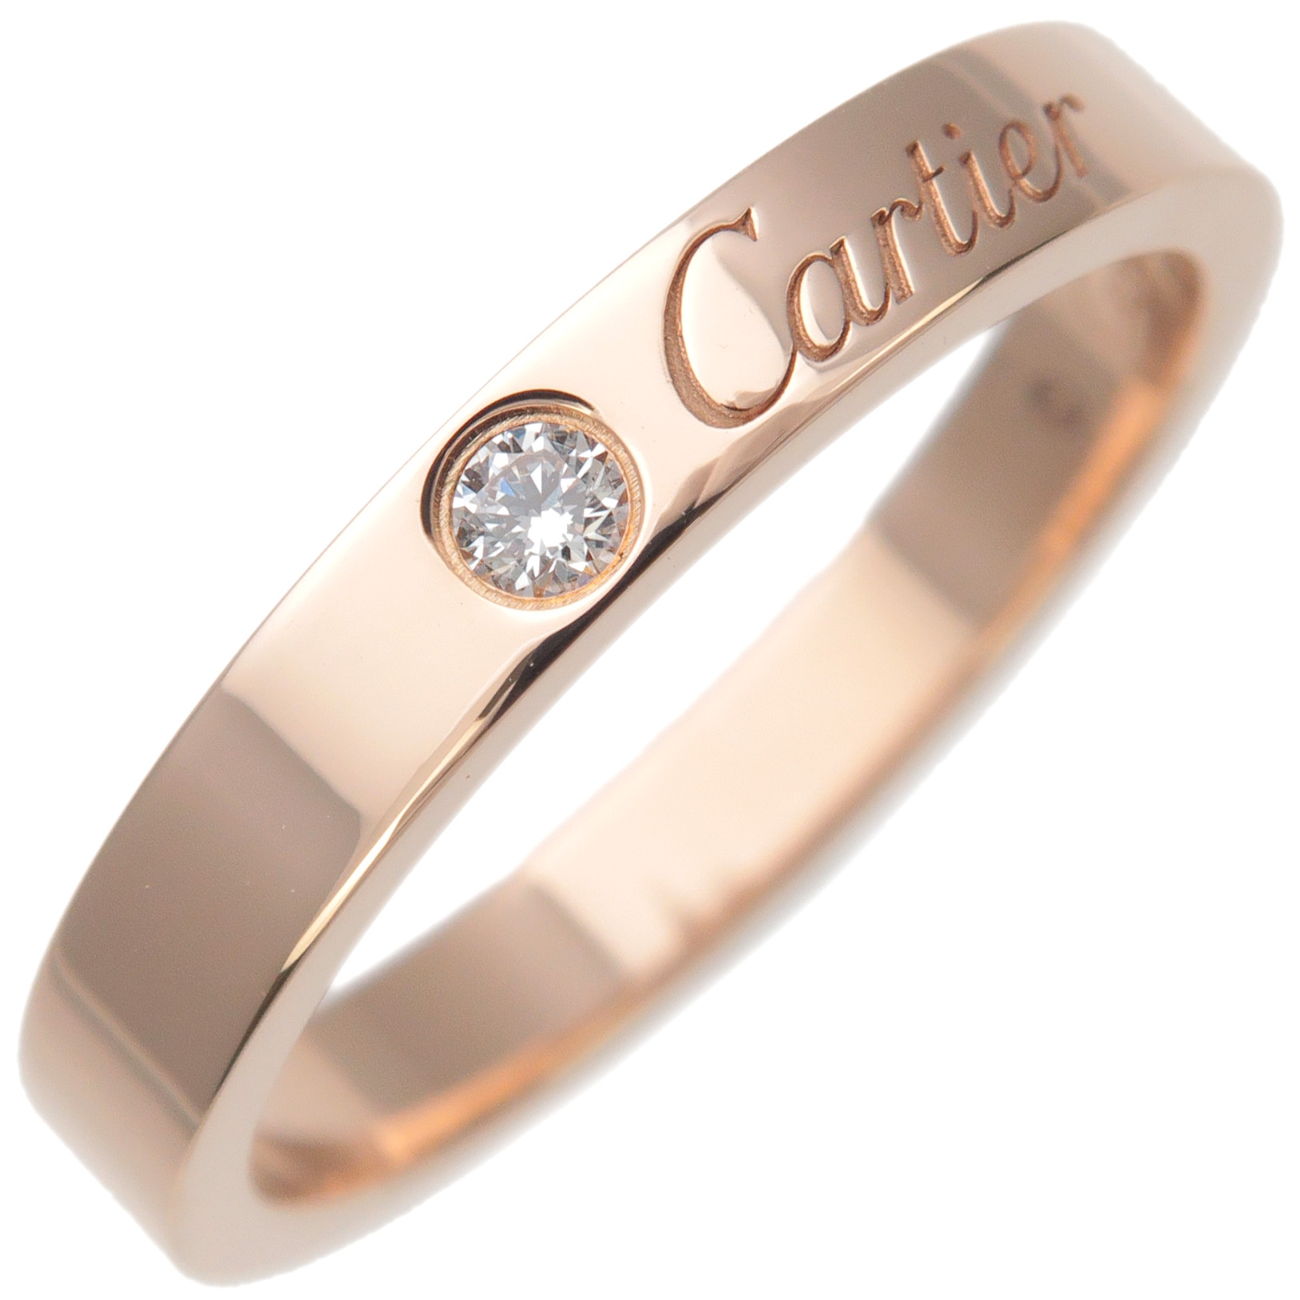 Cartier-Engraved-Ring-1P-Diamond-K18PG-750-Rose-Gold-#54-US7